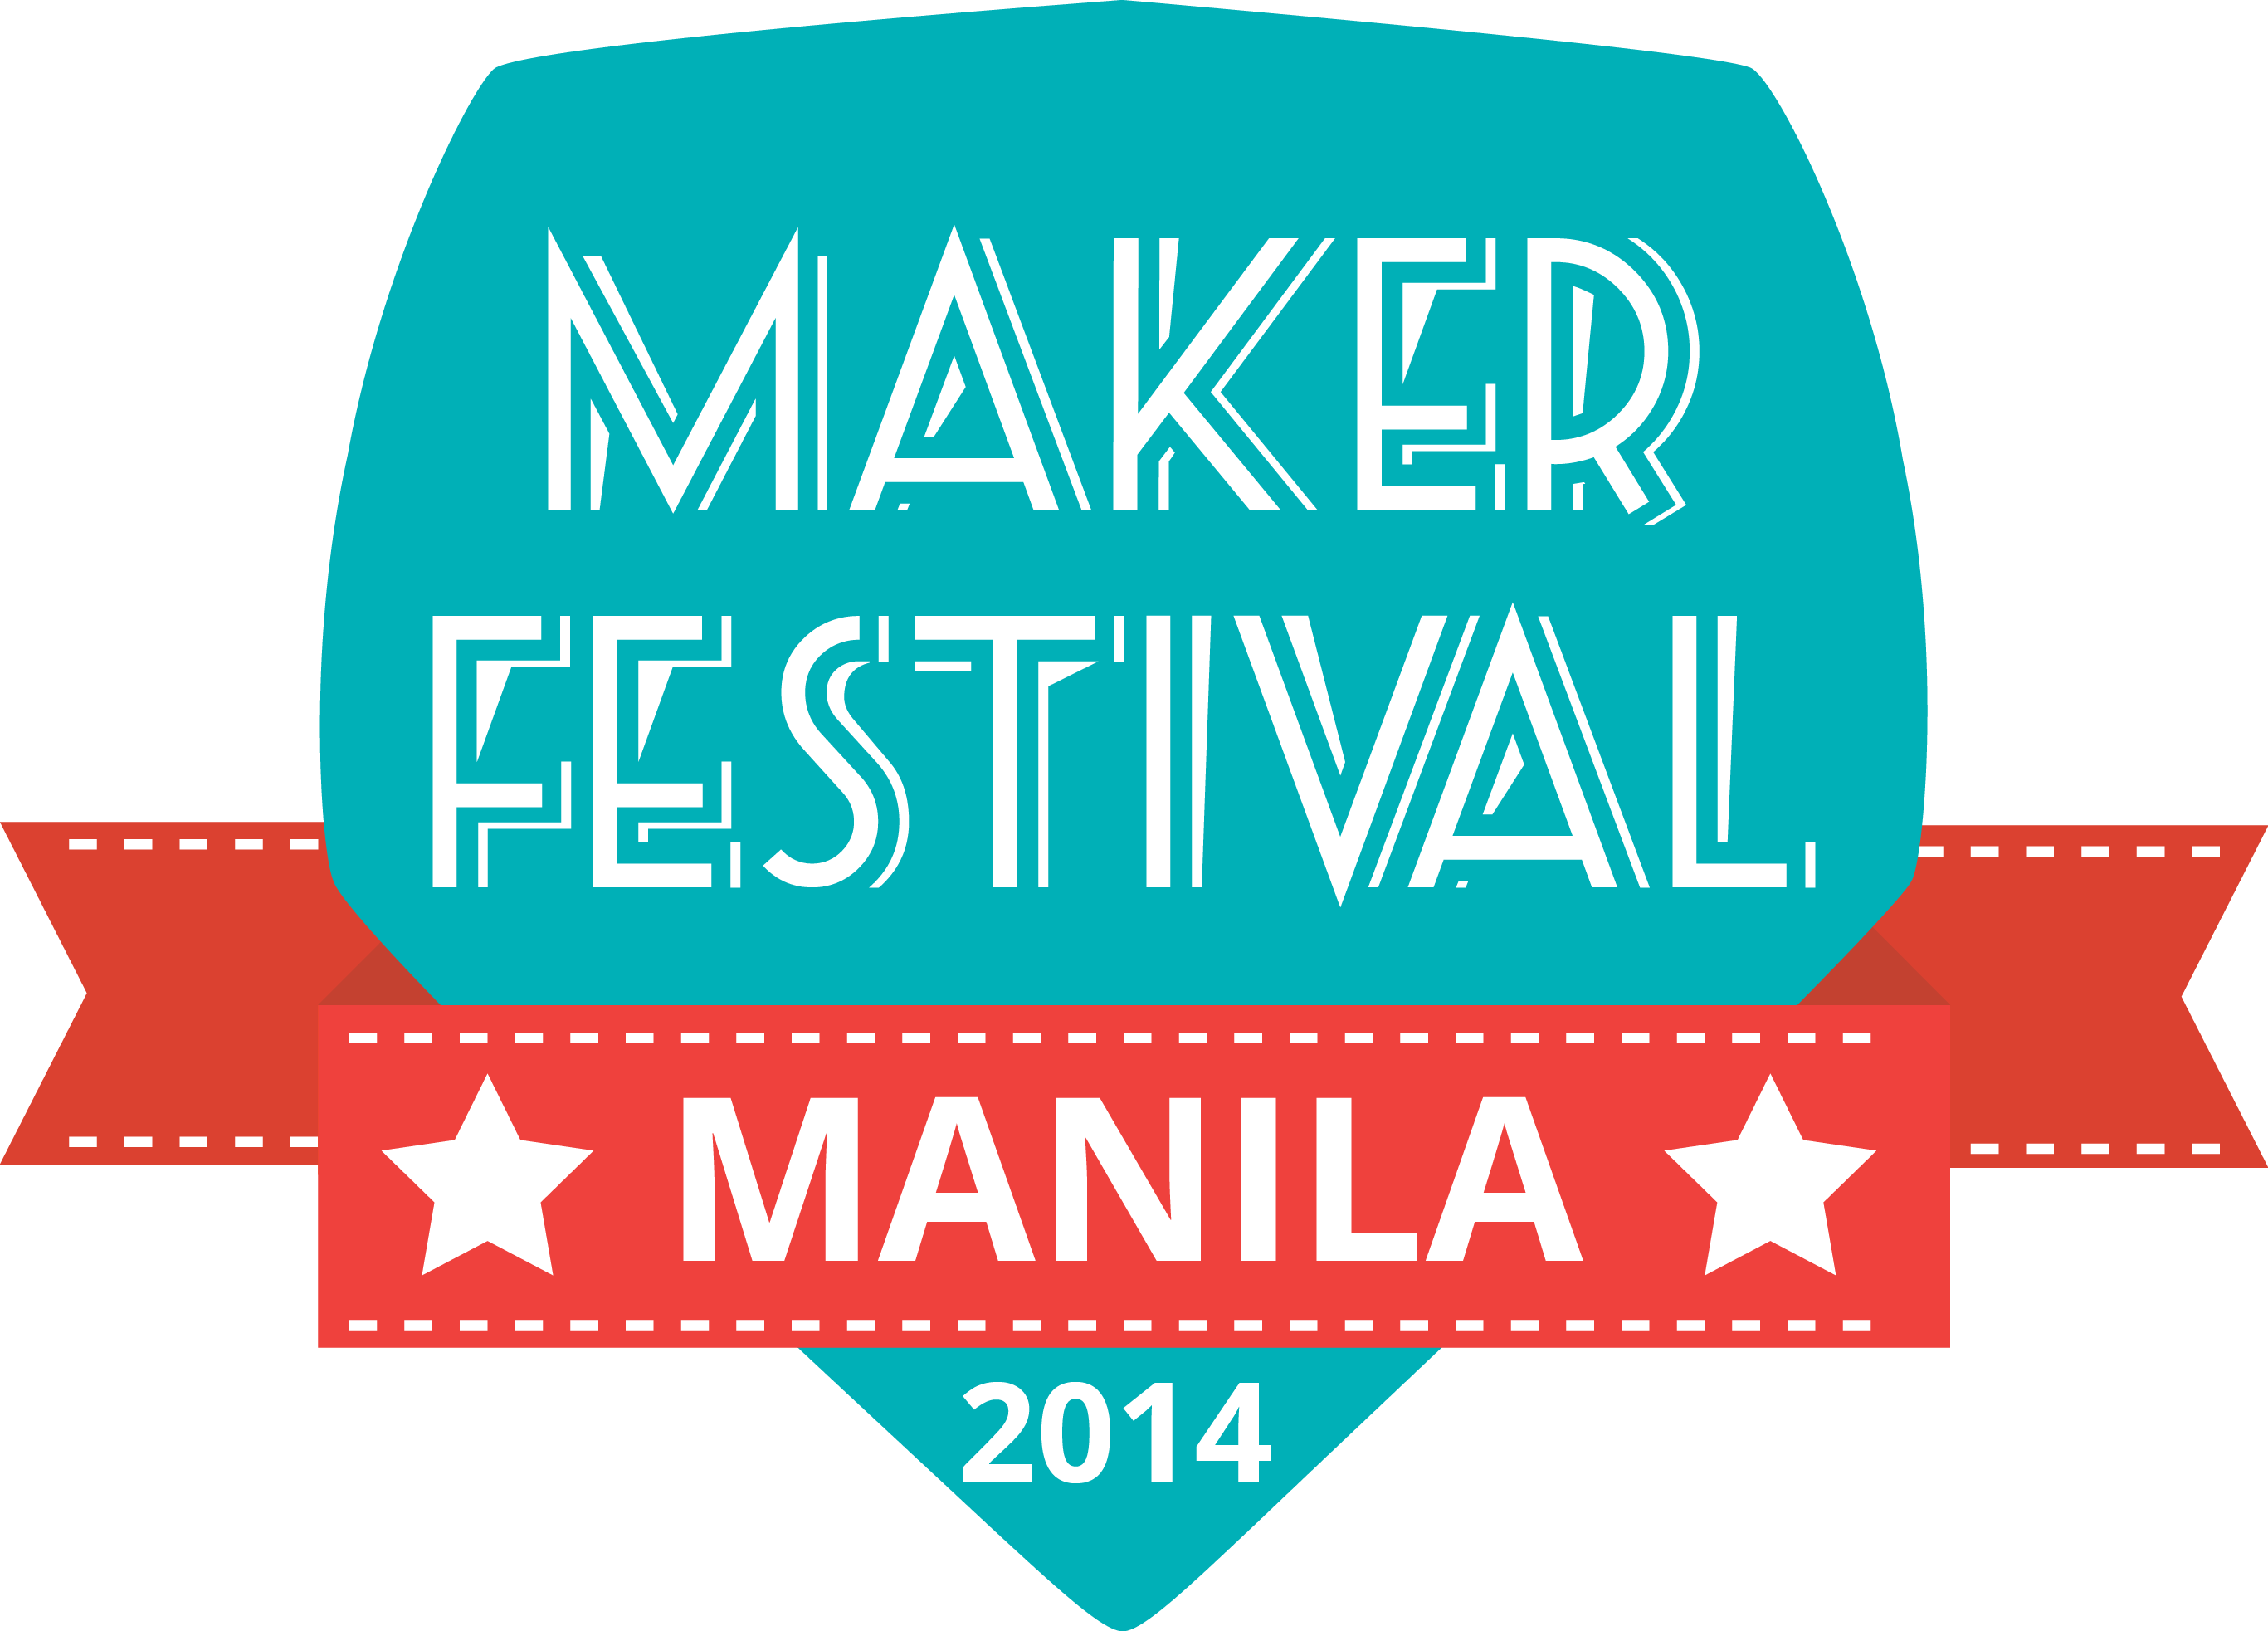 Maker Festival Manila 2014: Call for Exhibitors